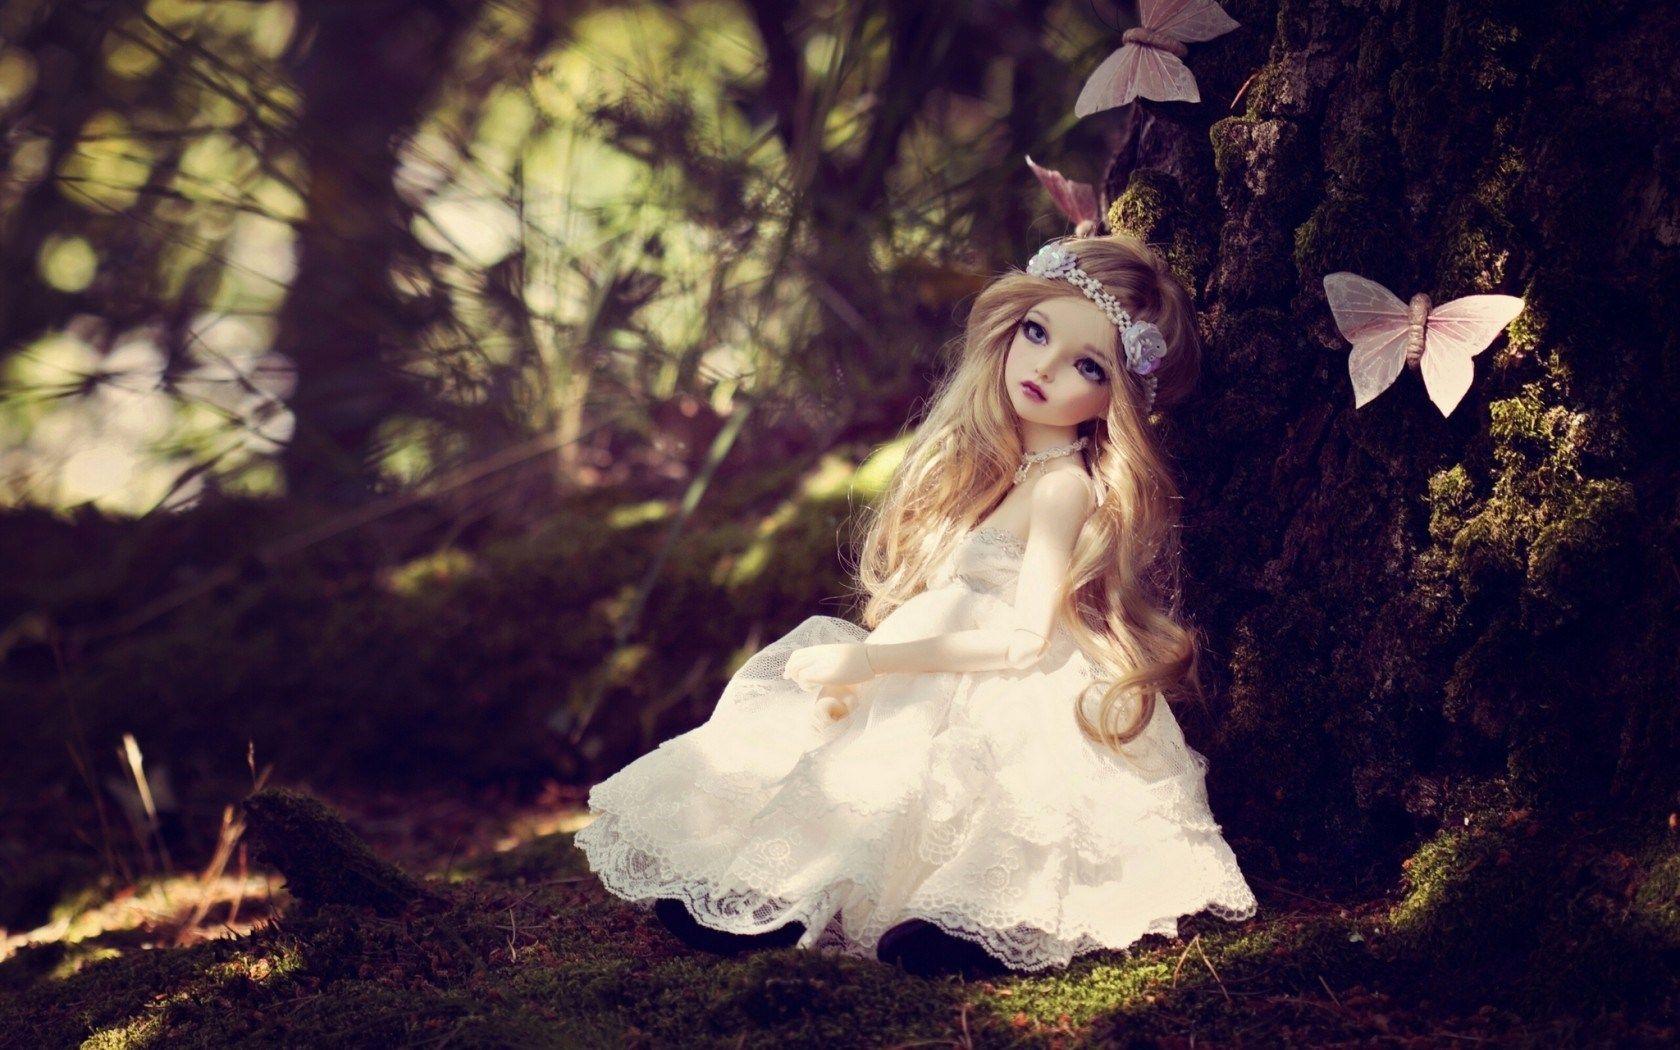 Cute Doll image. Beautiful image HD Picture & Desktop Wallpaper